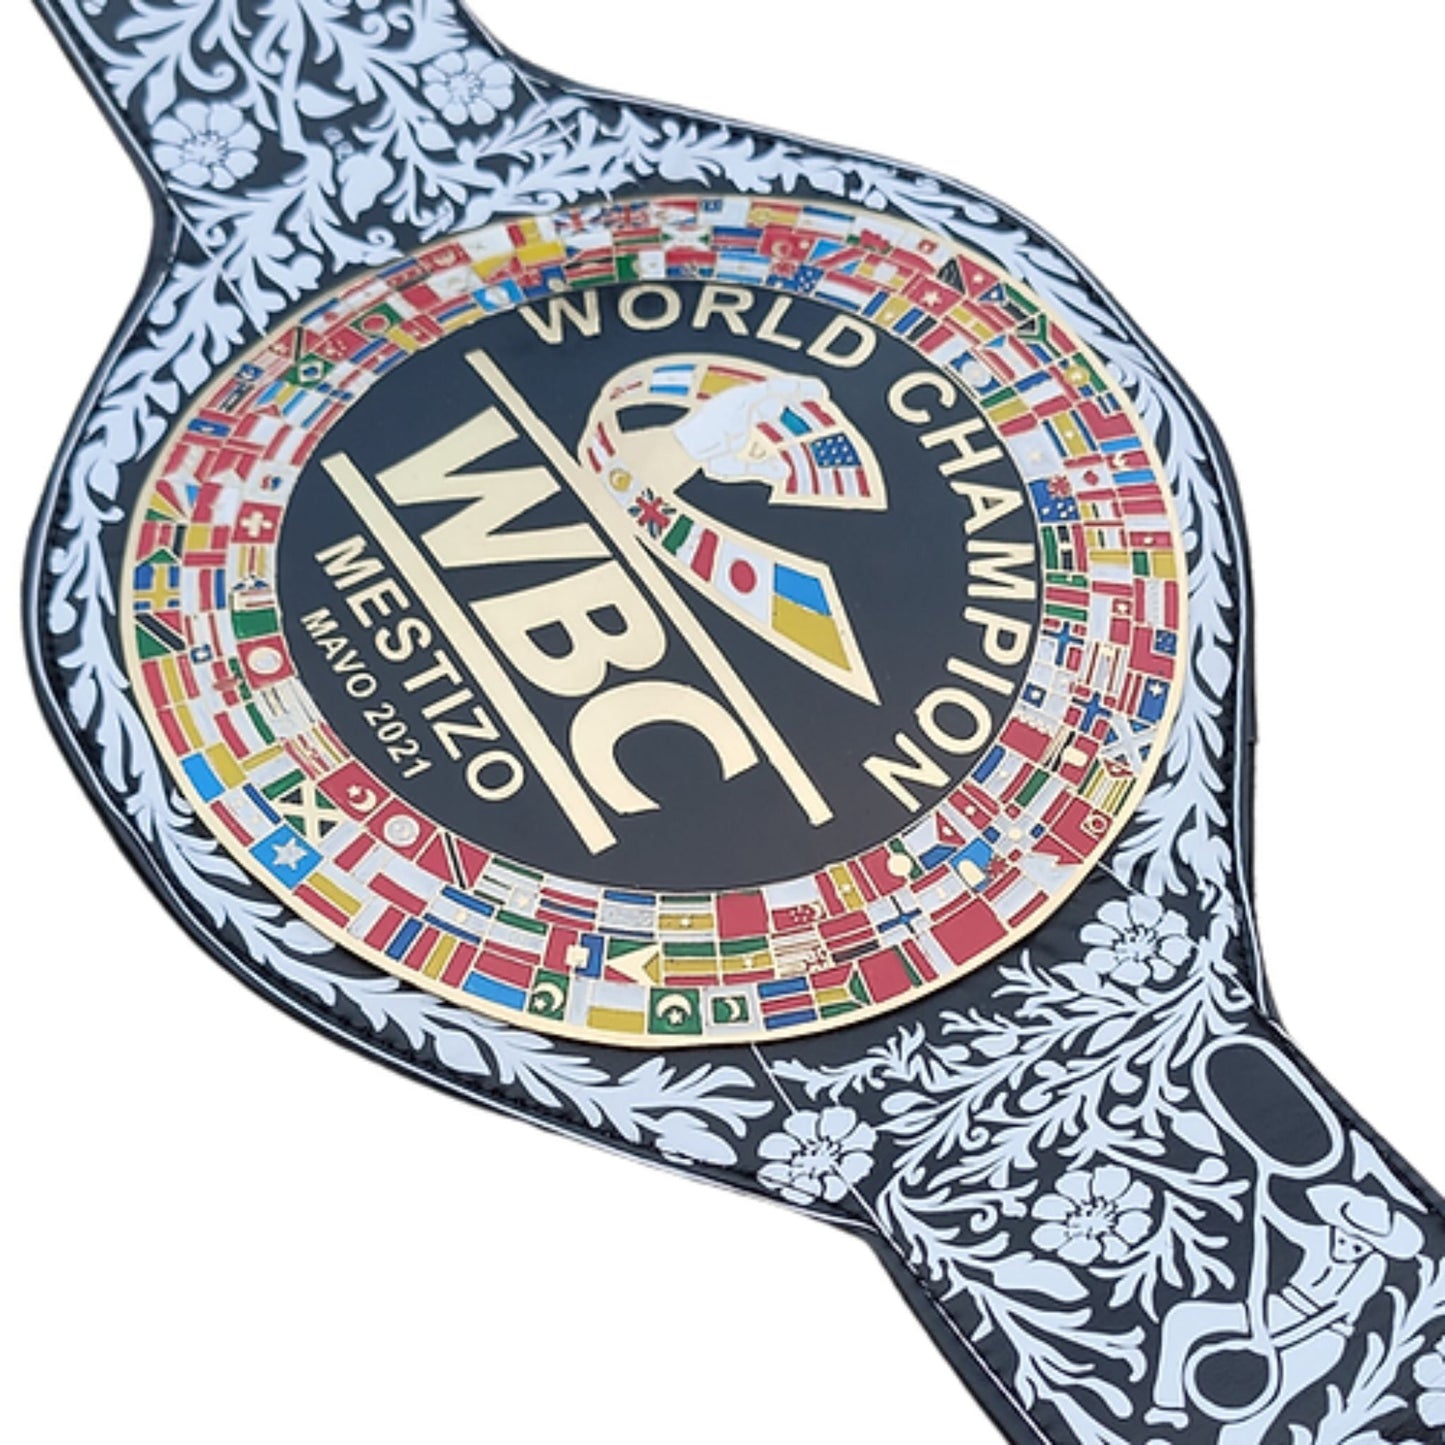 WBC MESTIZO MAVO 2021 Wrestling Boxing Replica Title Belt Adult size